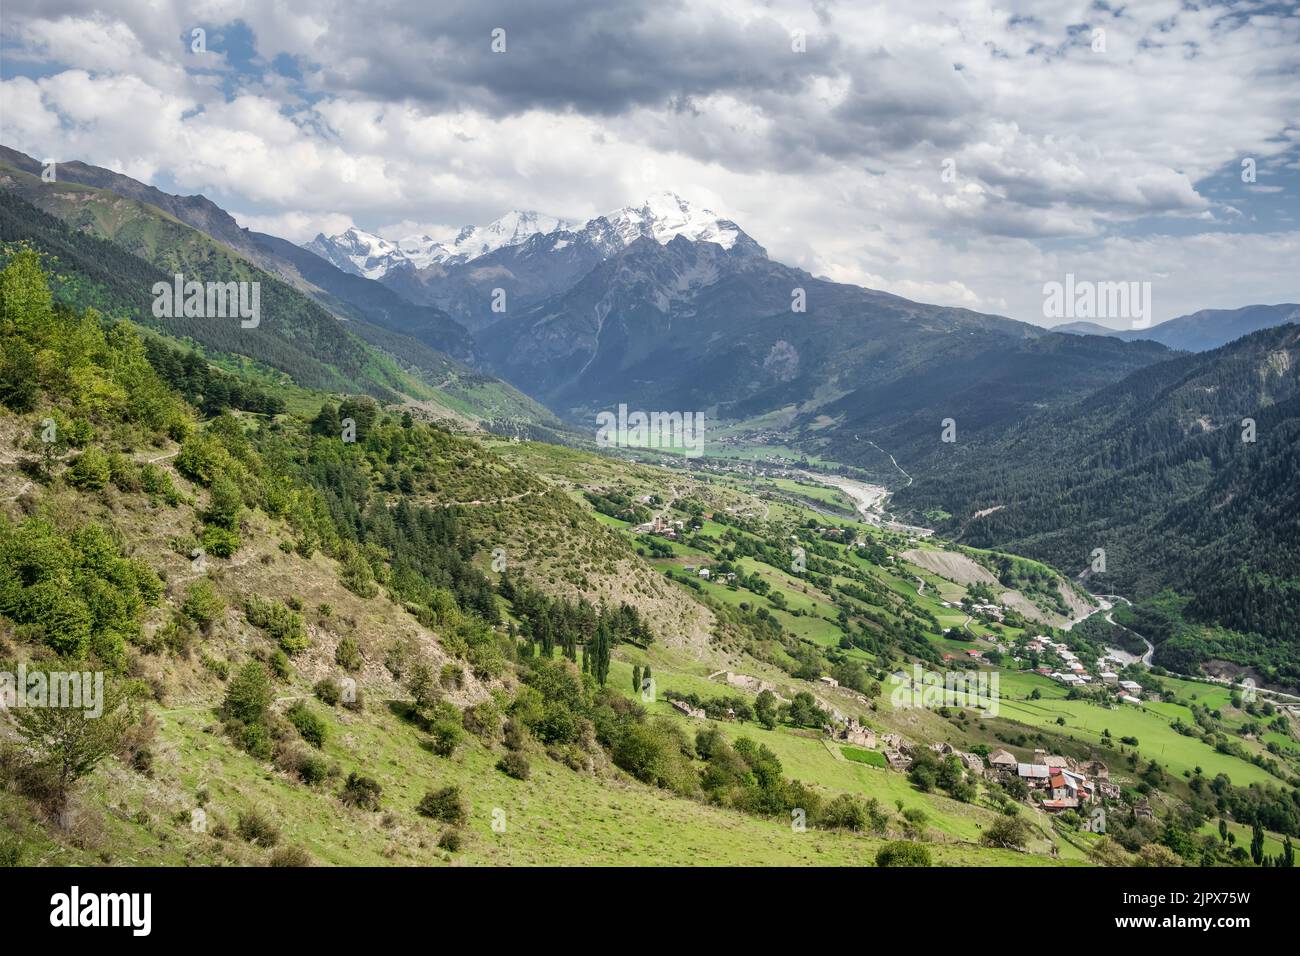 Landscape of the majestic Caucasus mountains in Svaneti region, Georgia Stock Photo